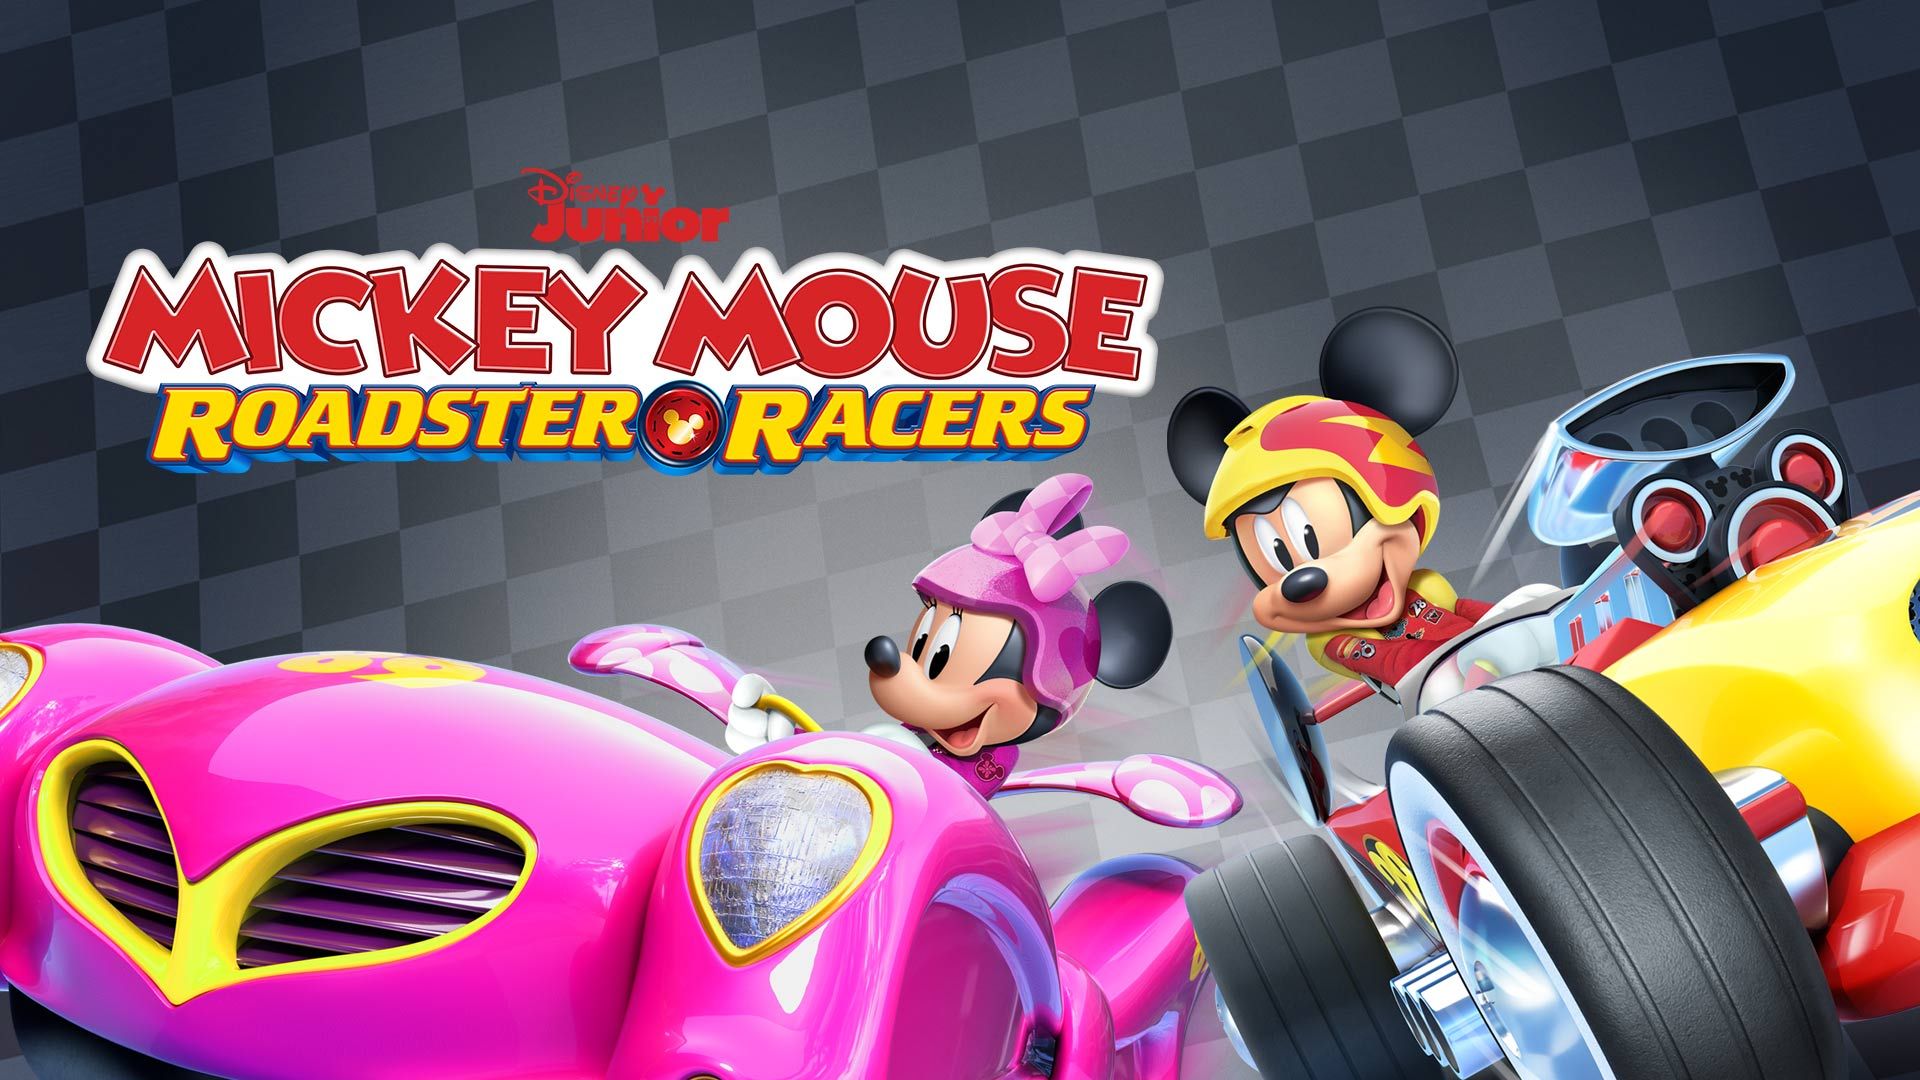 Watch Mickey Mouse Roadster Racers Season 1 Full Episodes on Disney+ Hotstar